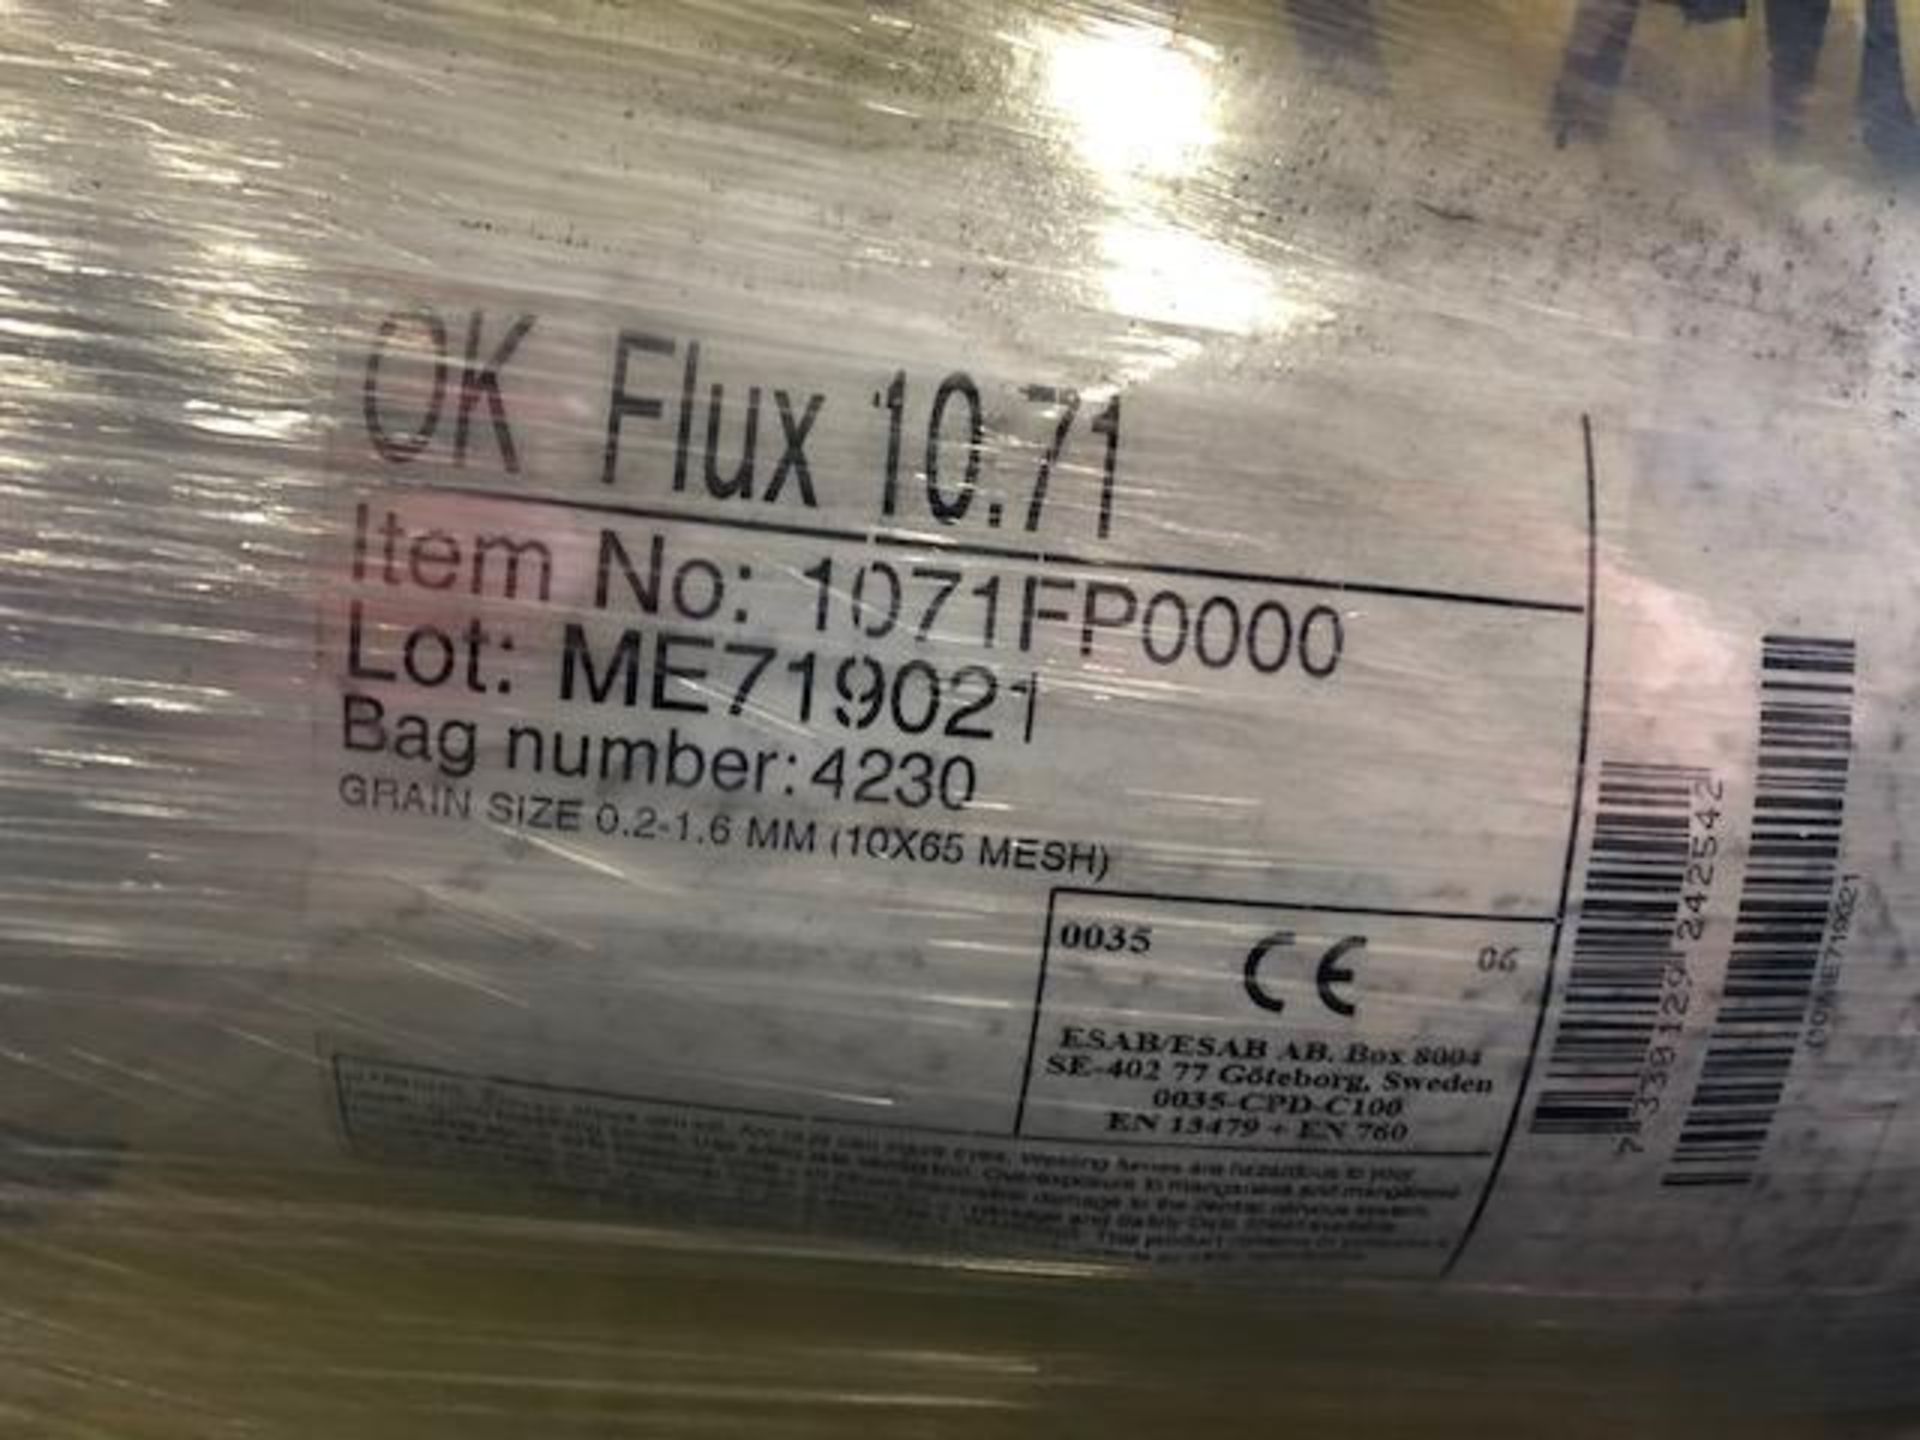 PALLET OF NEW OK FLUX 10.7, GRAIN SIZE 0.2-1.6 MM (10x65 MESH) - Image 5 of 6